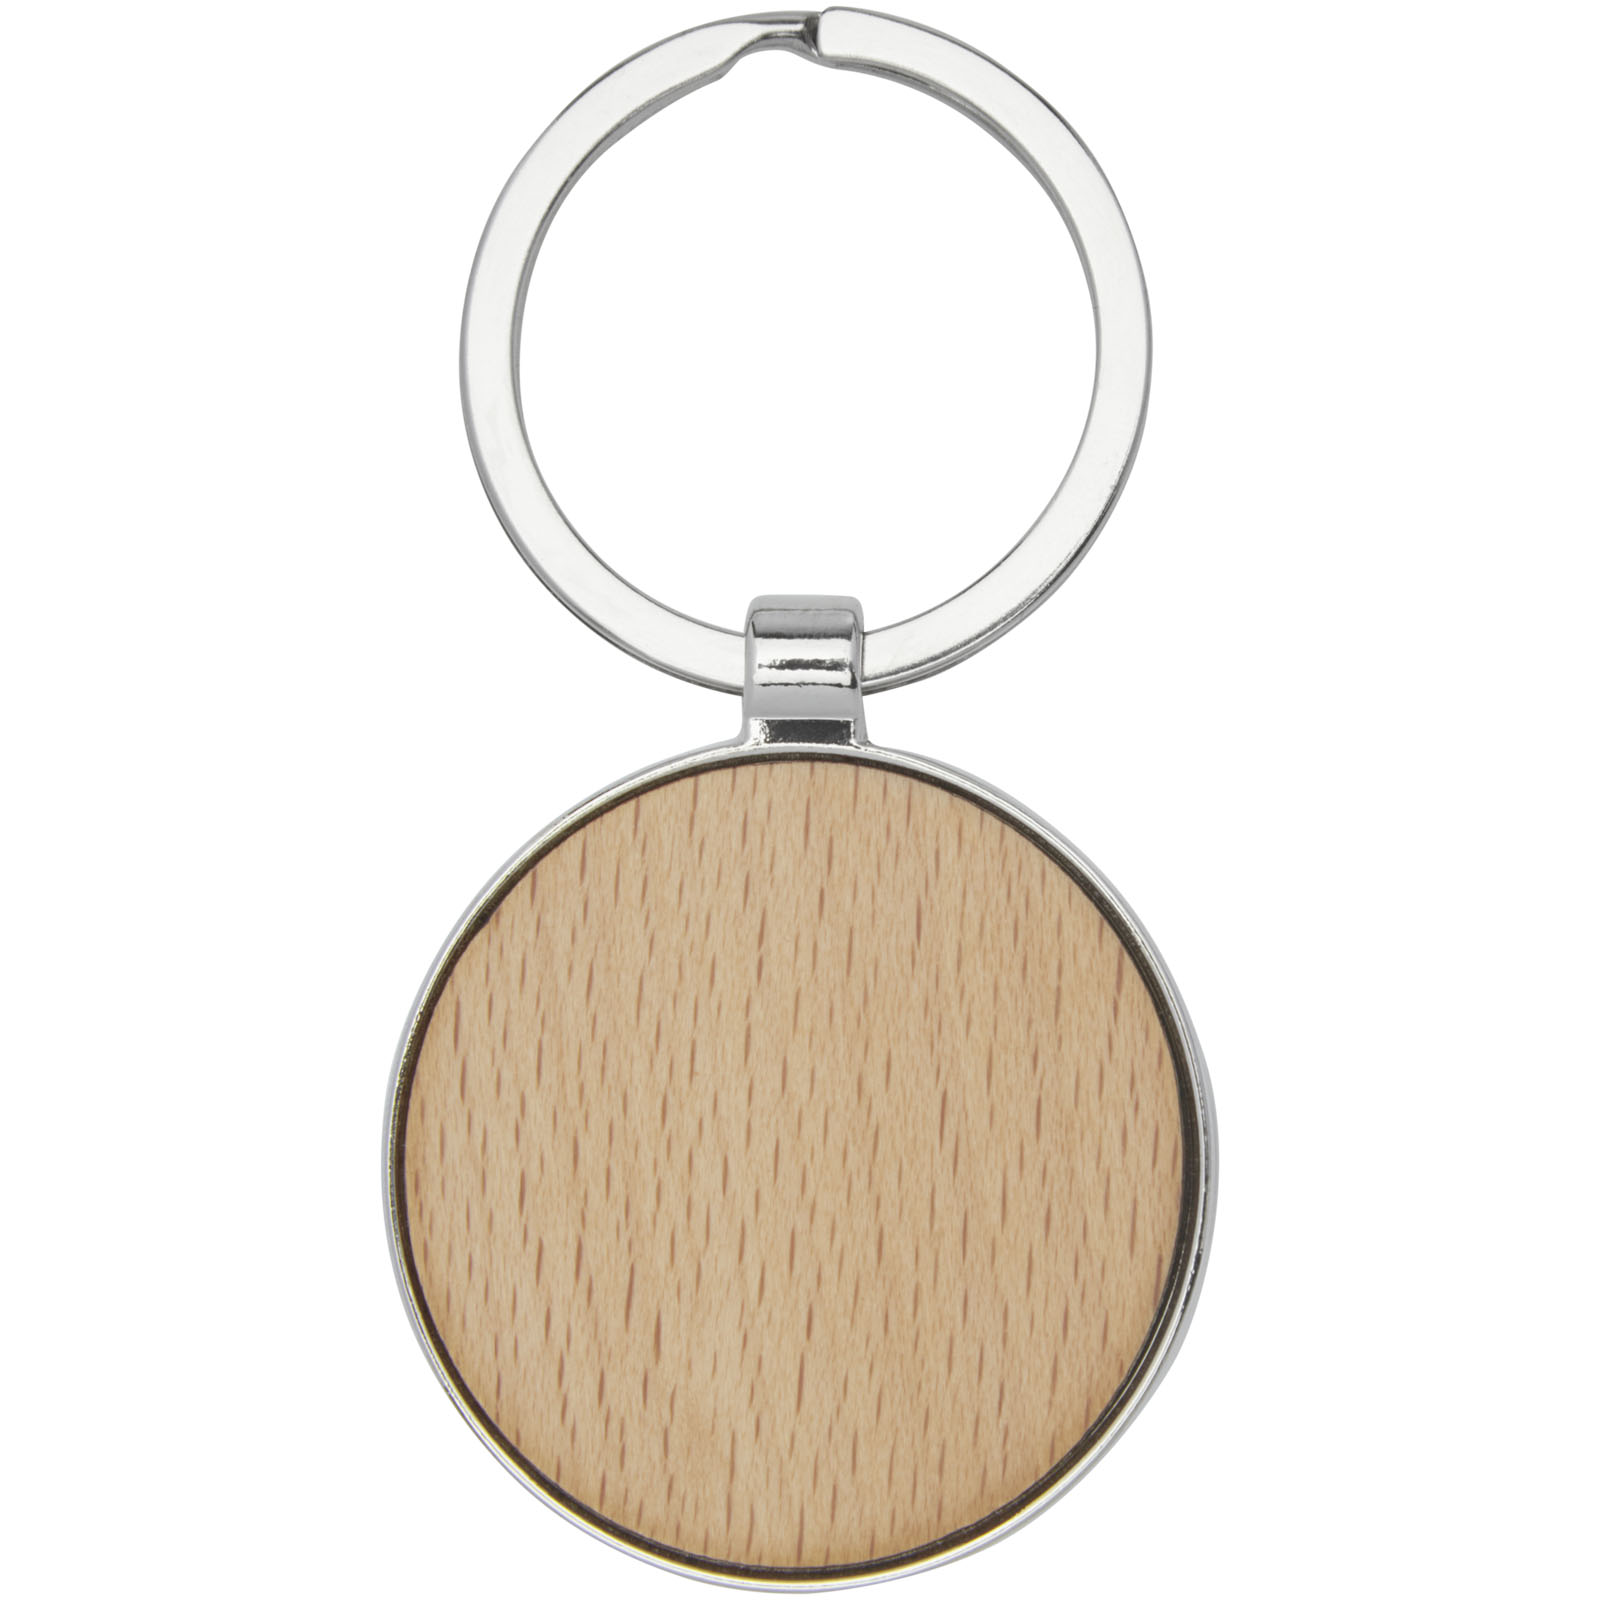 Advertising Keychains & Keyrings - Moreno beech wood round keychain - 2